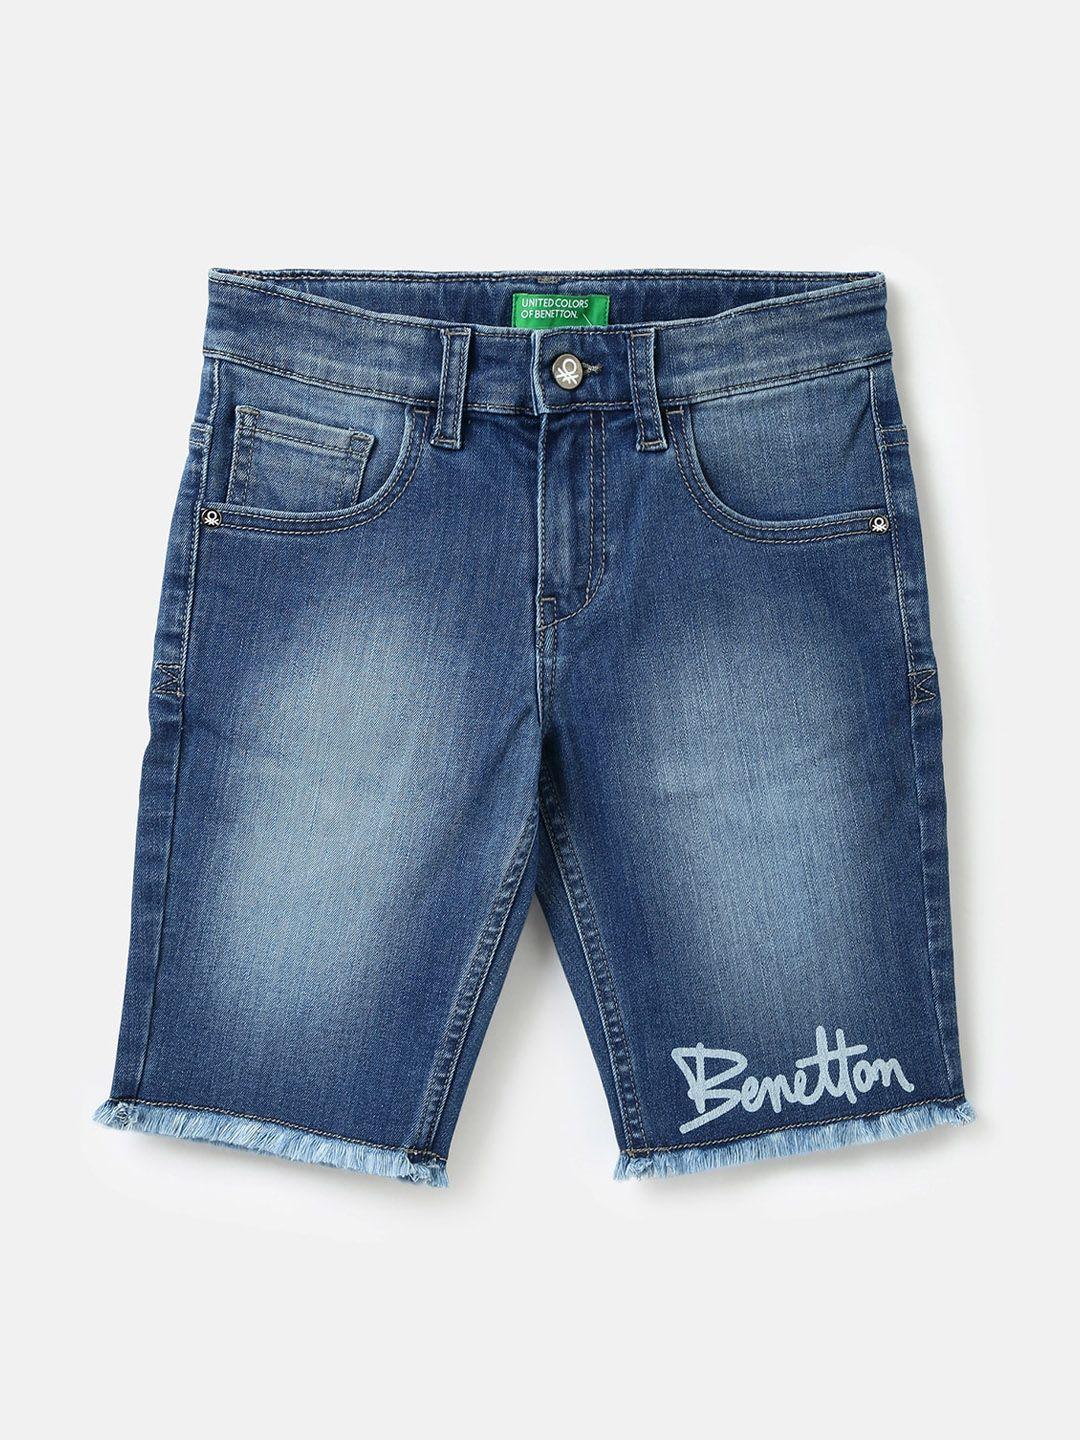 united-colors-of-benetton-boys-denim-shorts